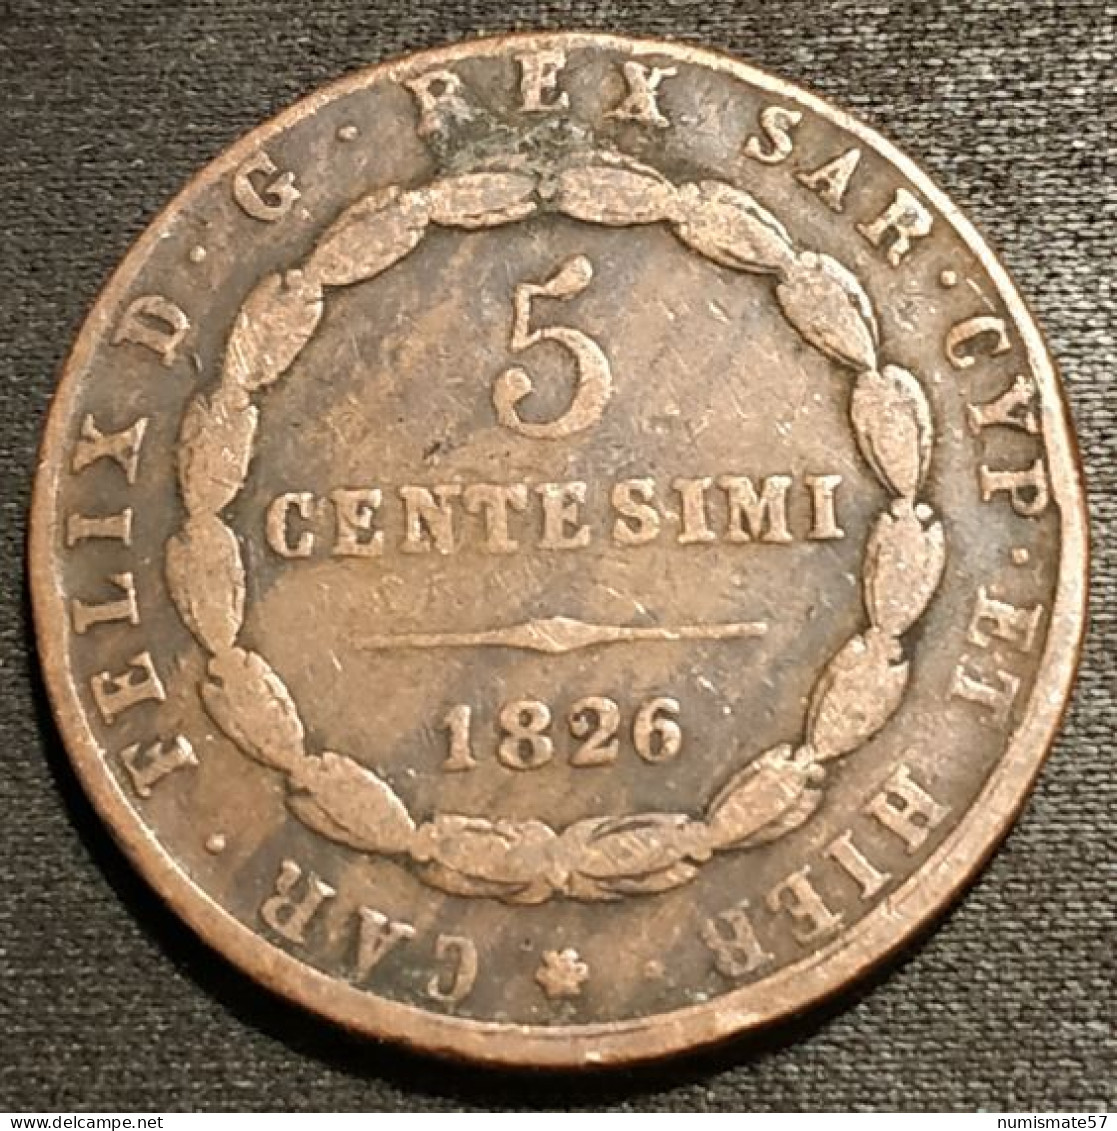 ITALIE - ITALIA - 5 CENTESIMI 1826 L - Carolus Felix - KM 127.1 ( Royaume De Sardaigne ) - Piemont-Sardinien-It. Savoyen